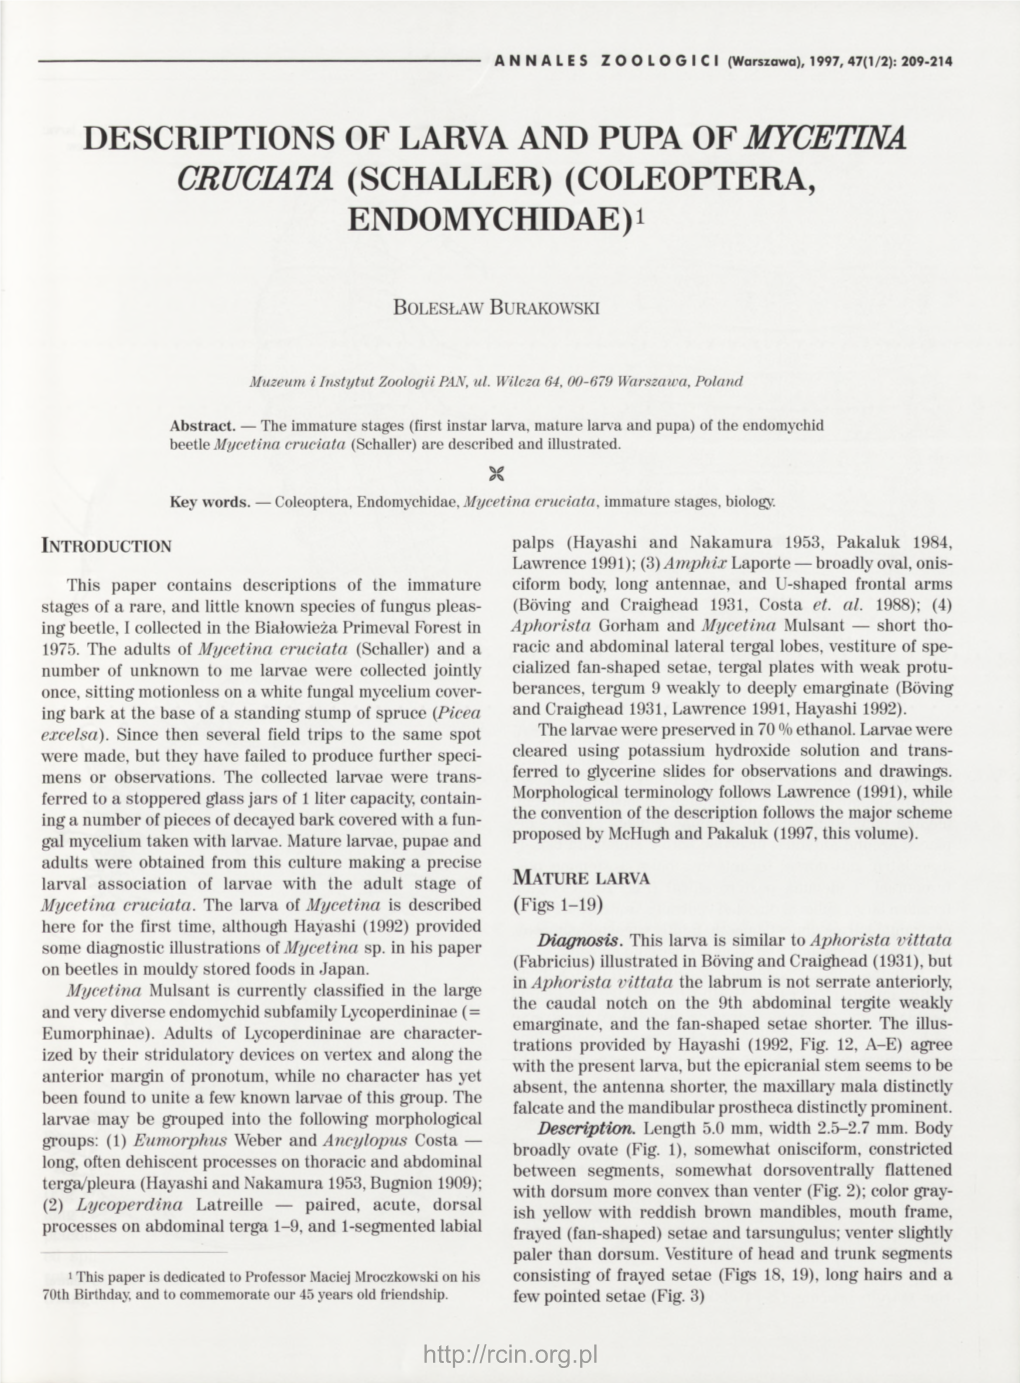 Descriptions of Larva and Pupa of Mycetina Cruciata (Schaller) 211